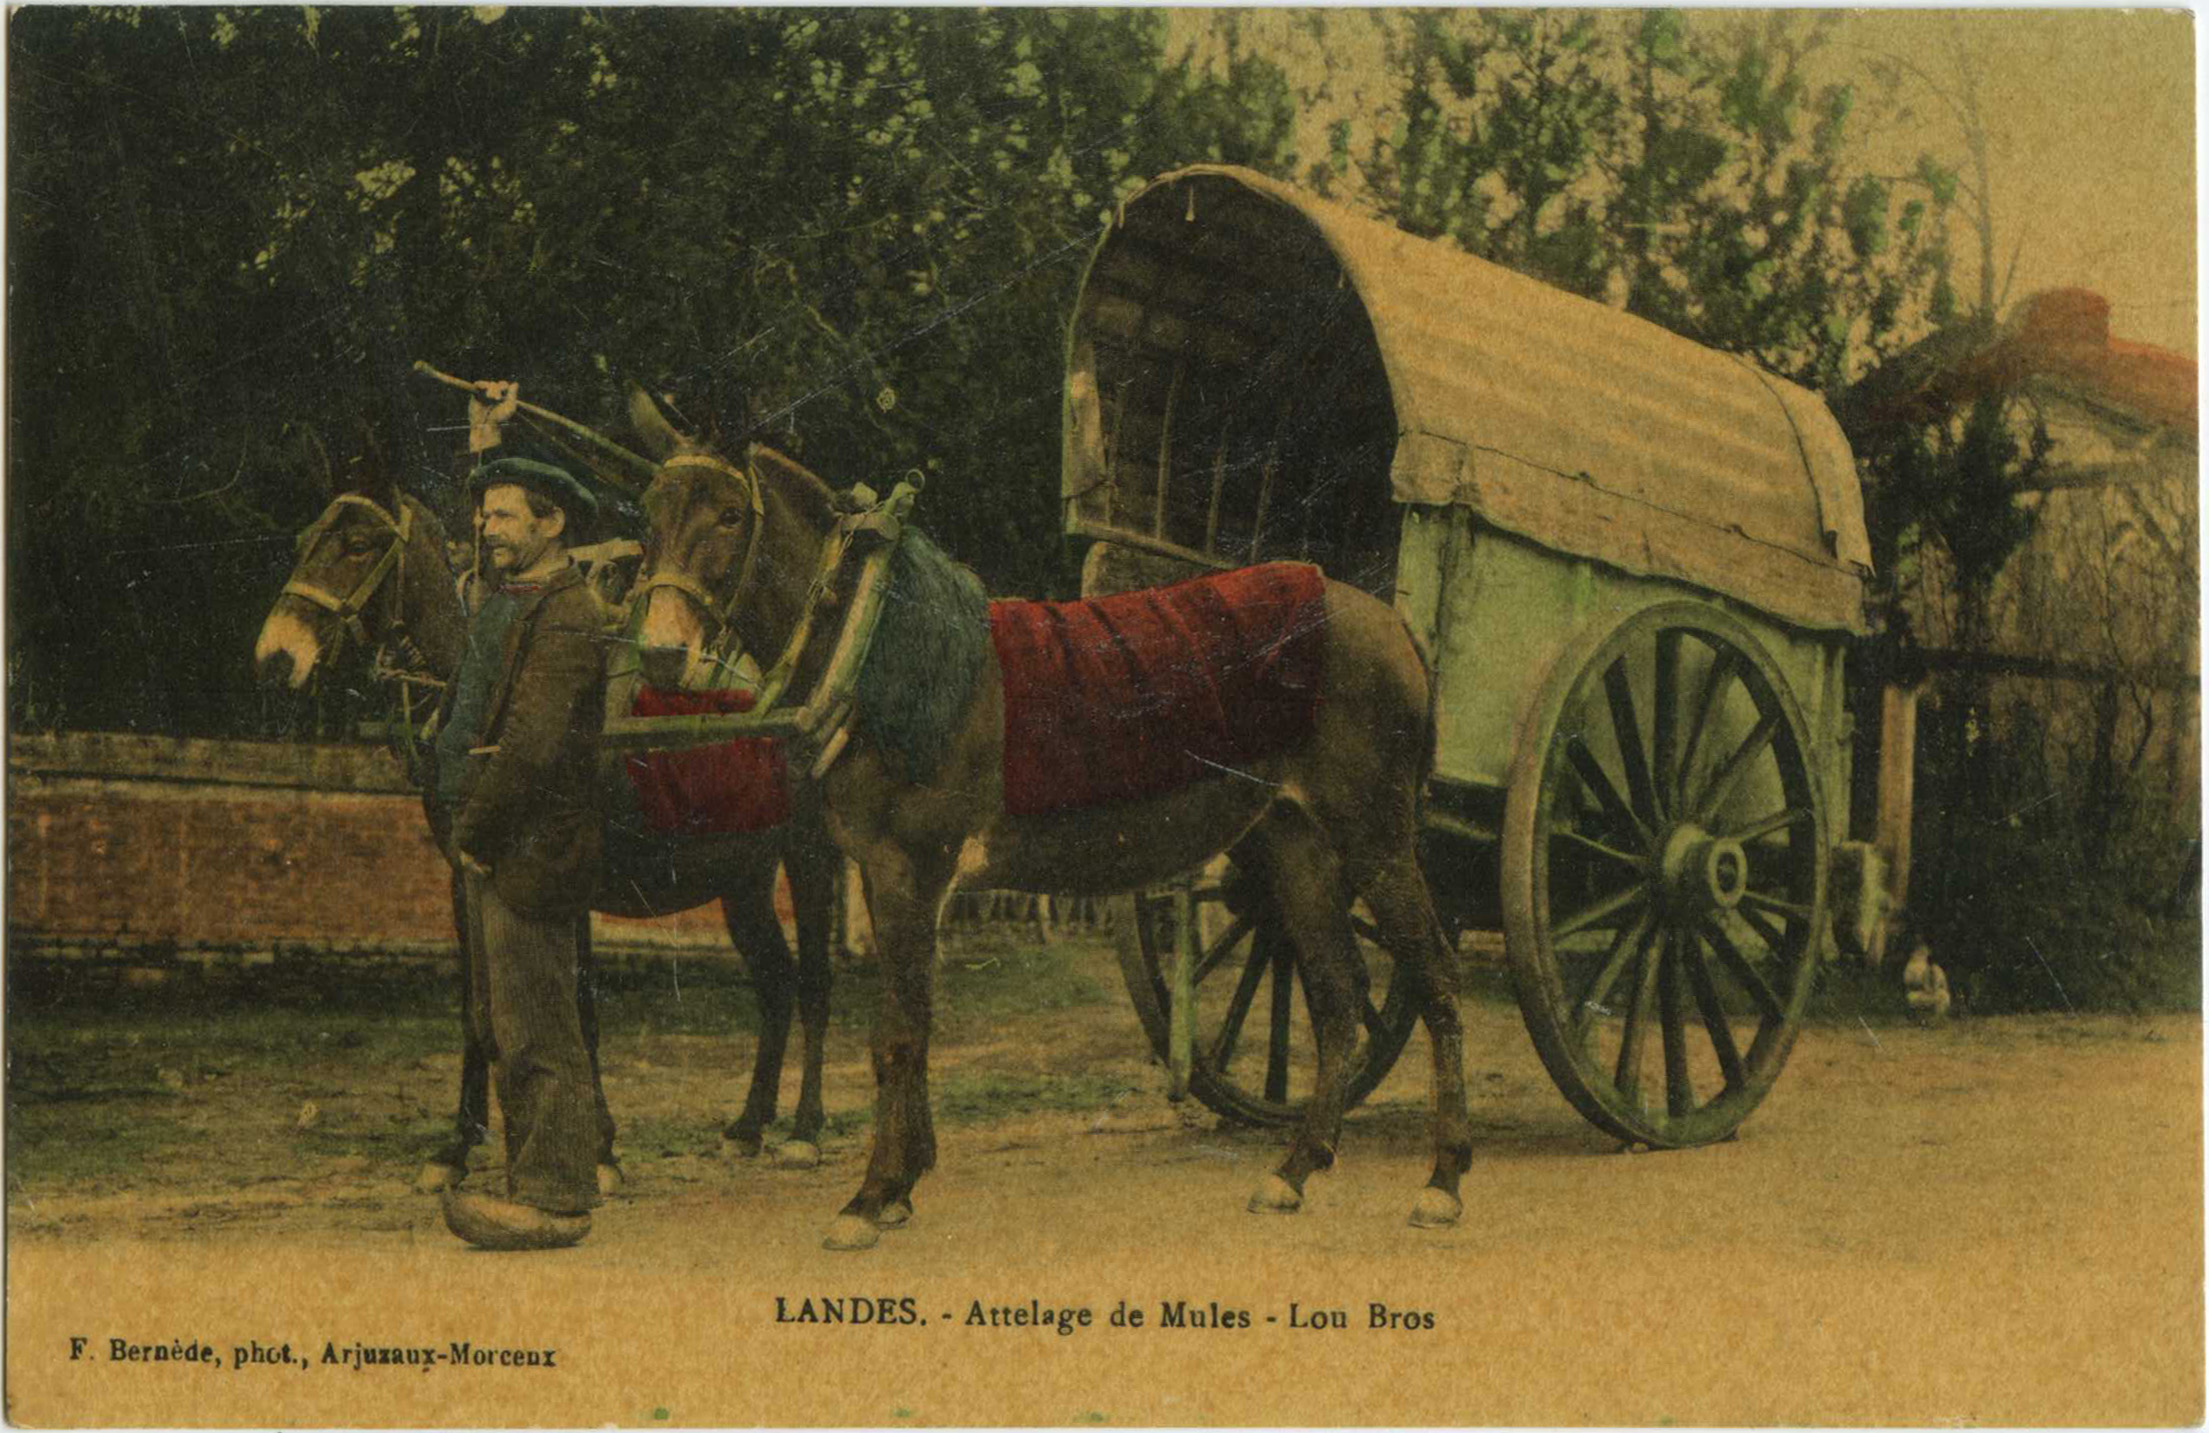 Landes - LANDES - Attelage de Mules - Lou Bros